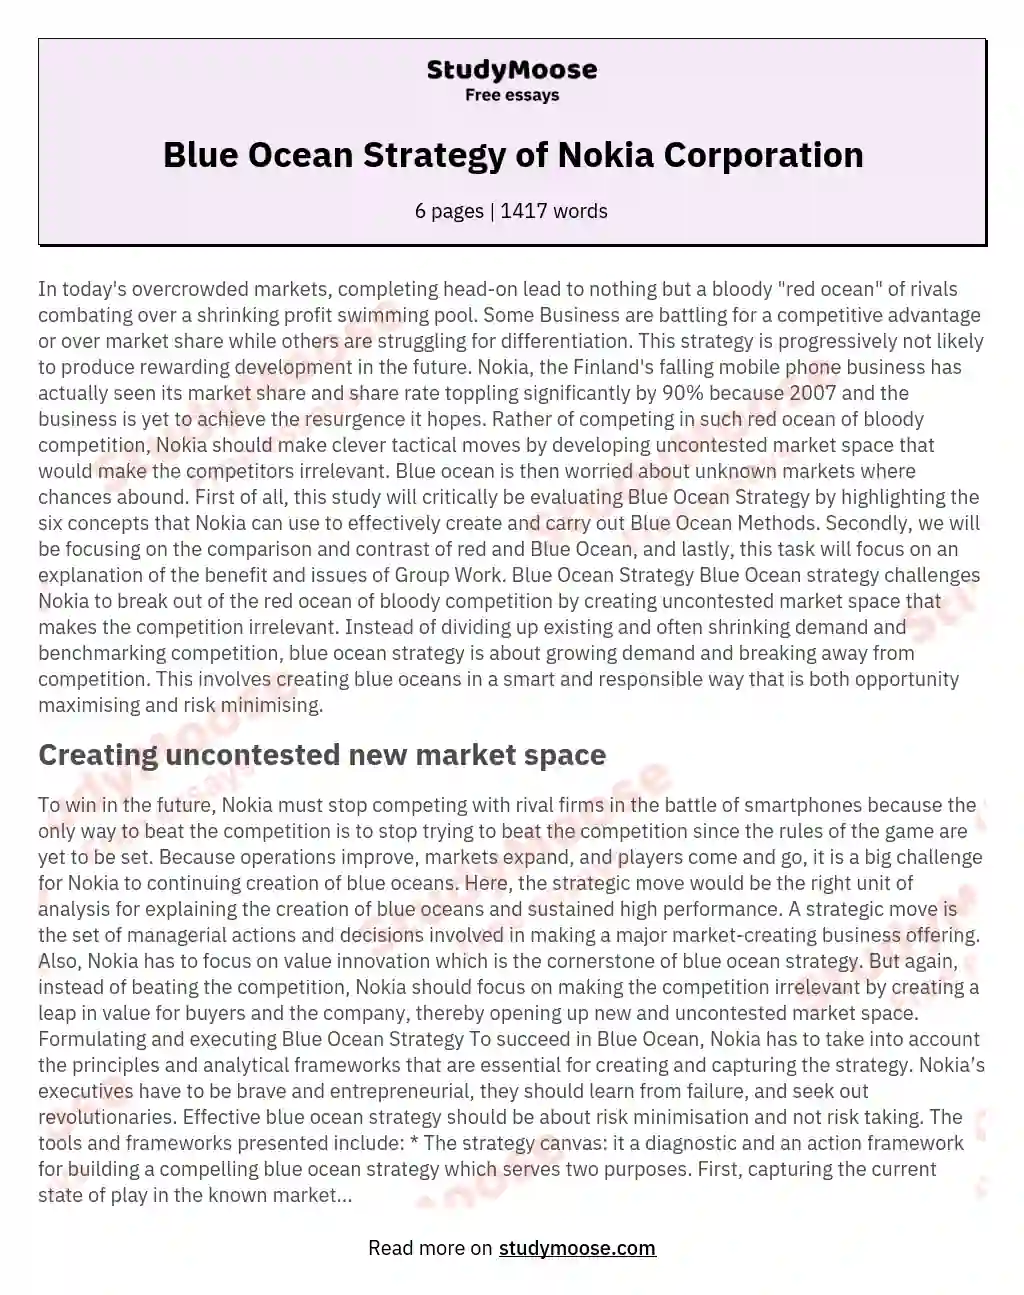 Blue Ocean Strategy of Nokia Corporation essay